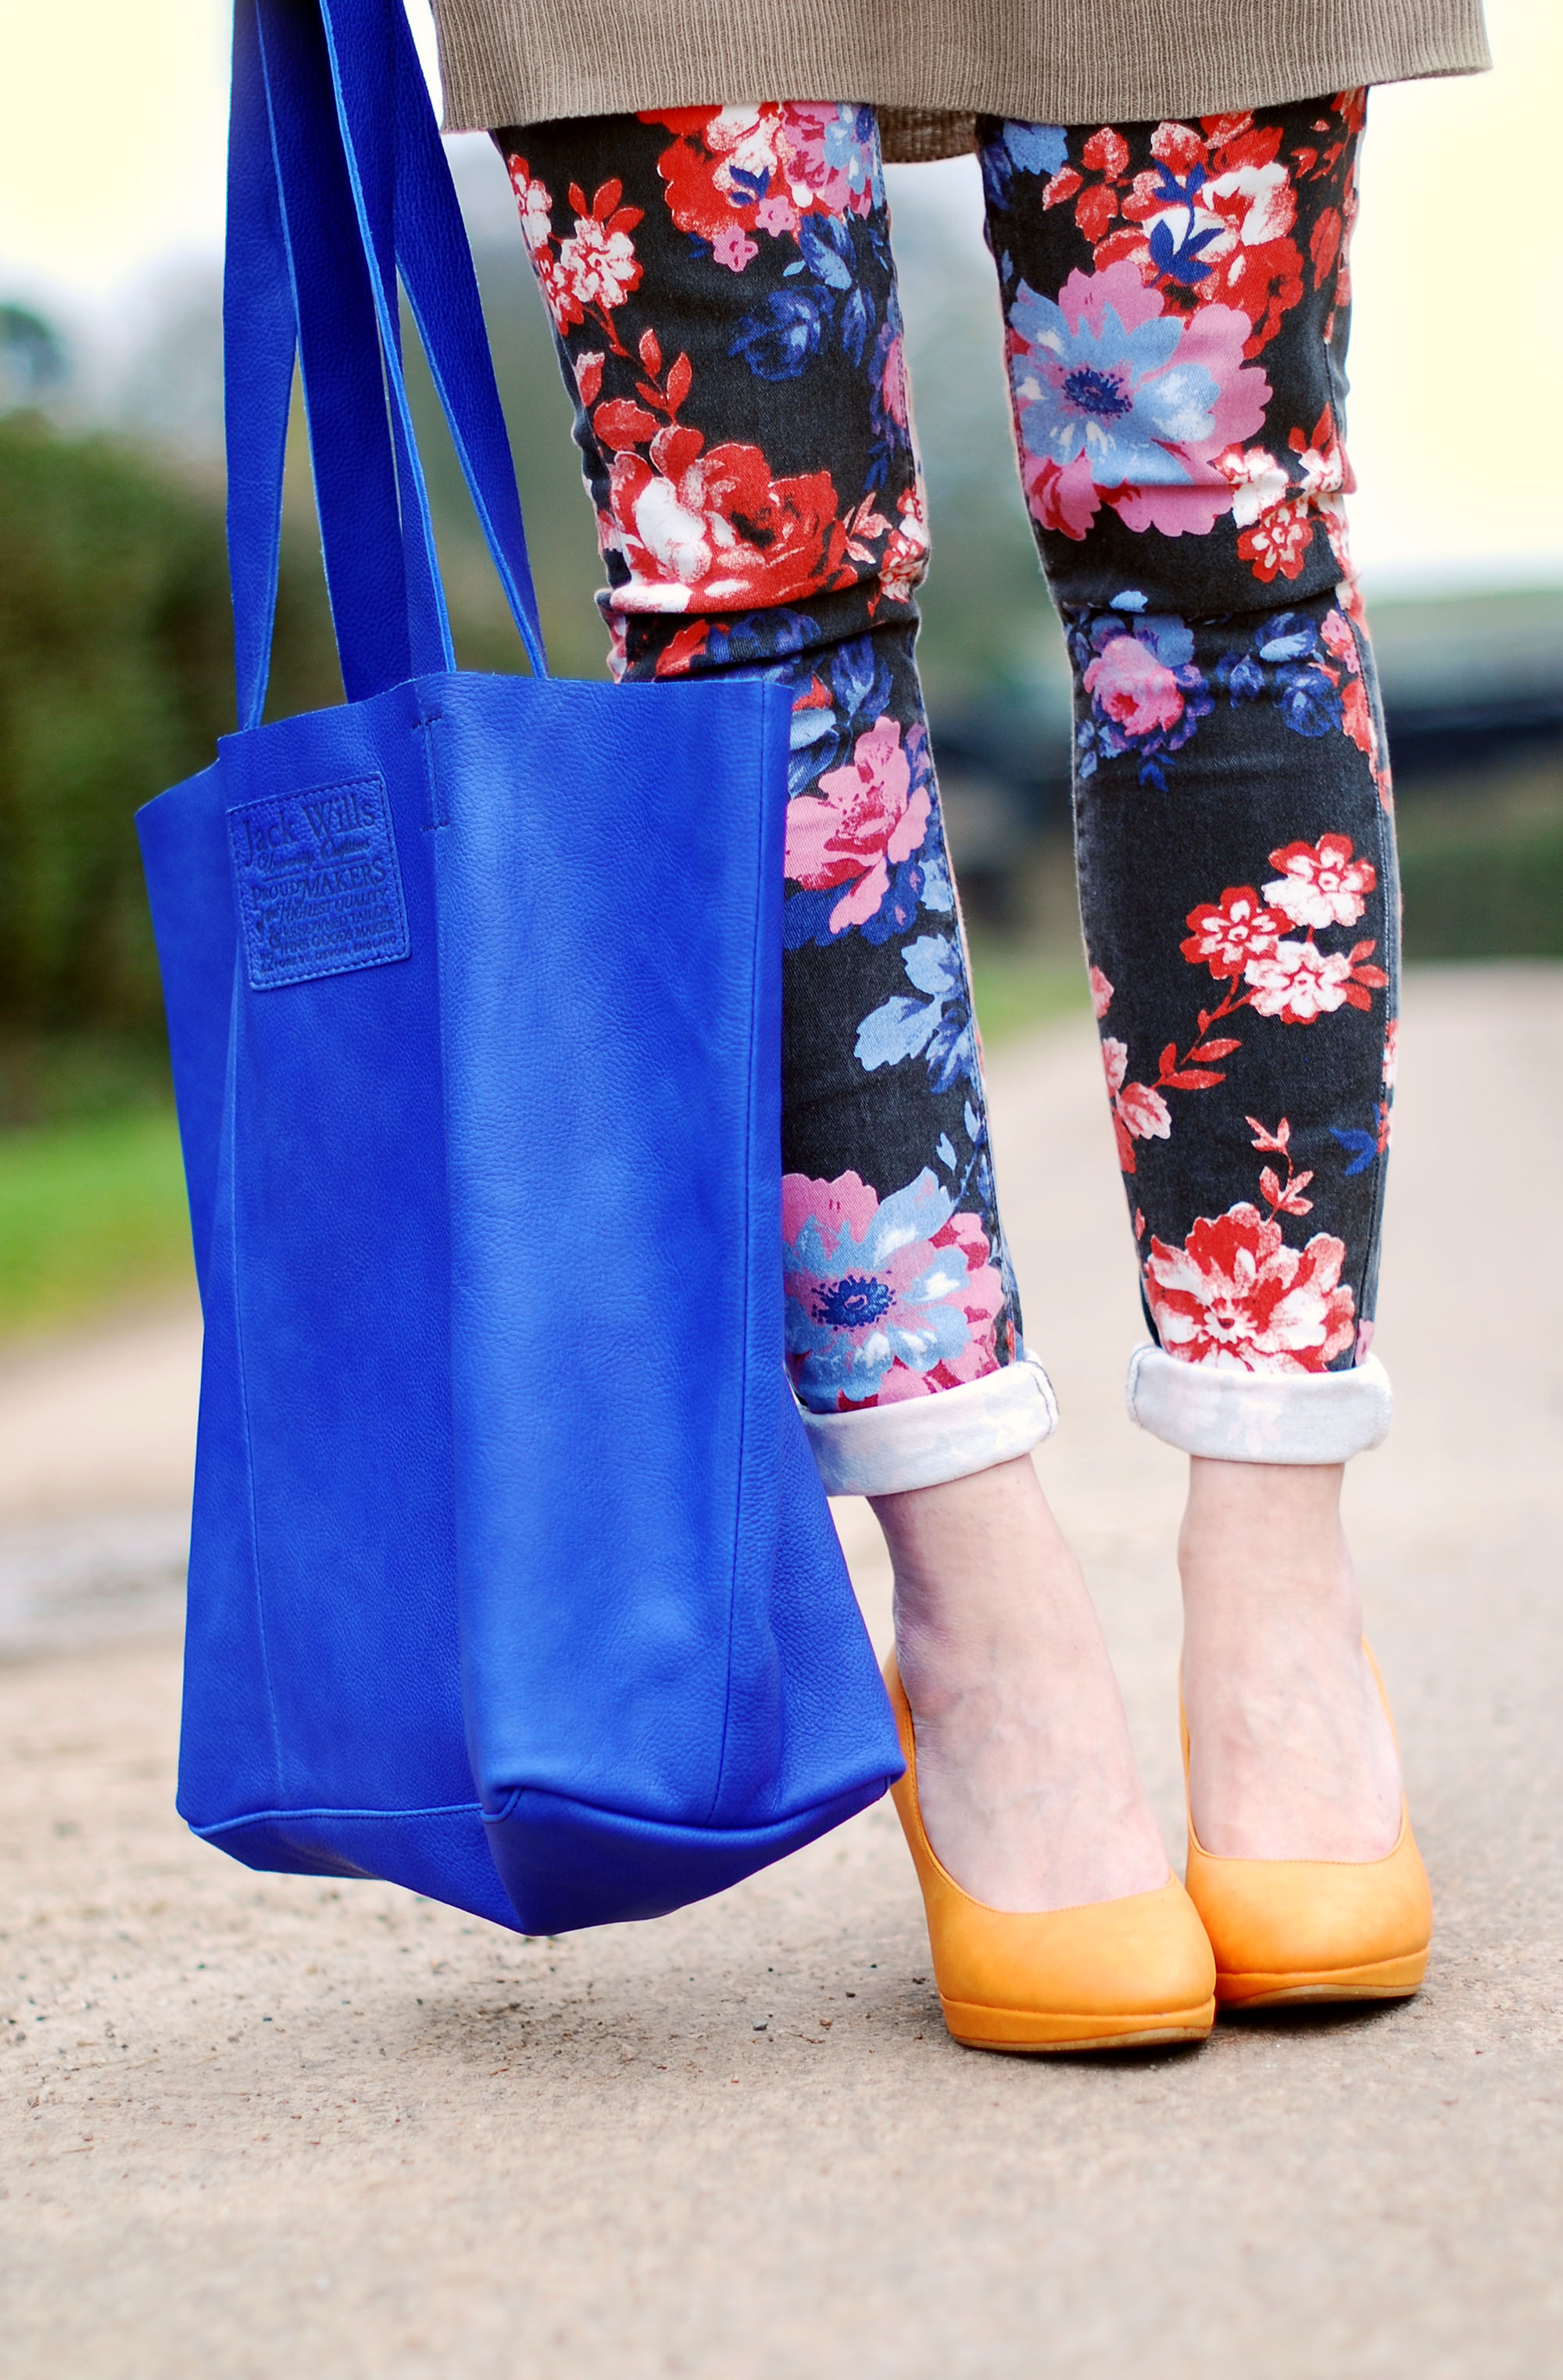 Cobalt blue tote, floral jeans & tangerine heels